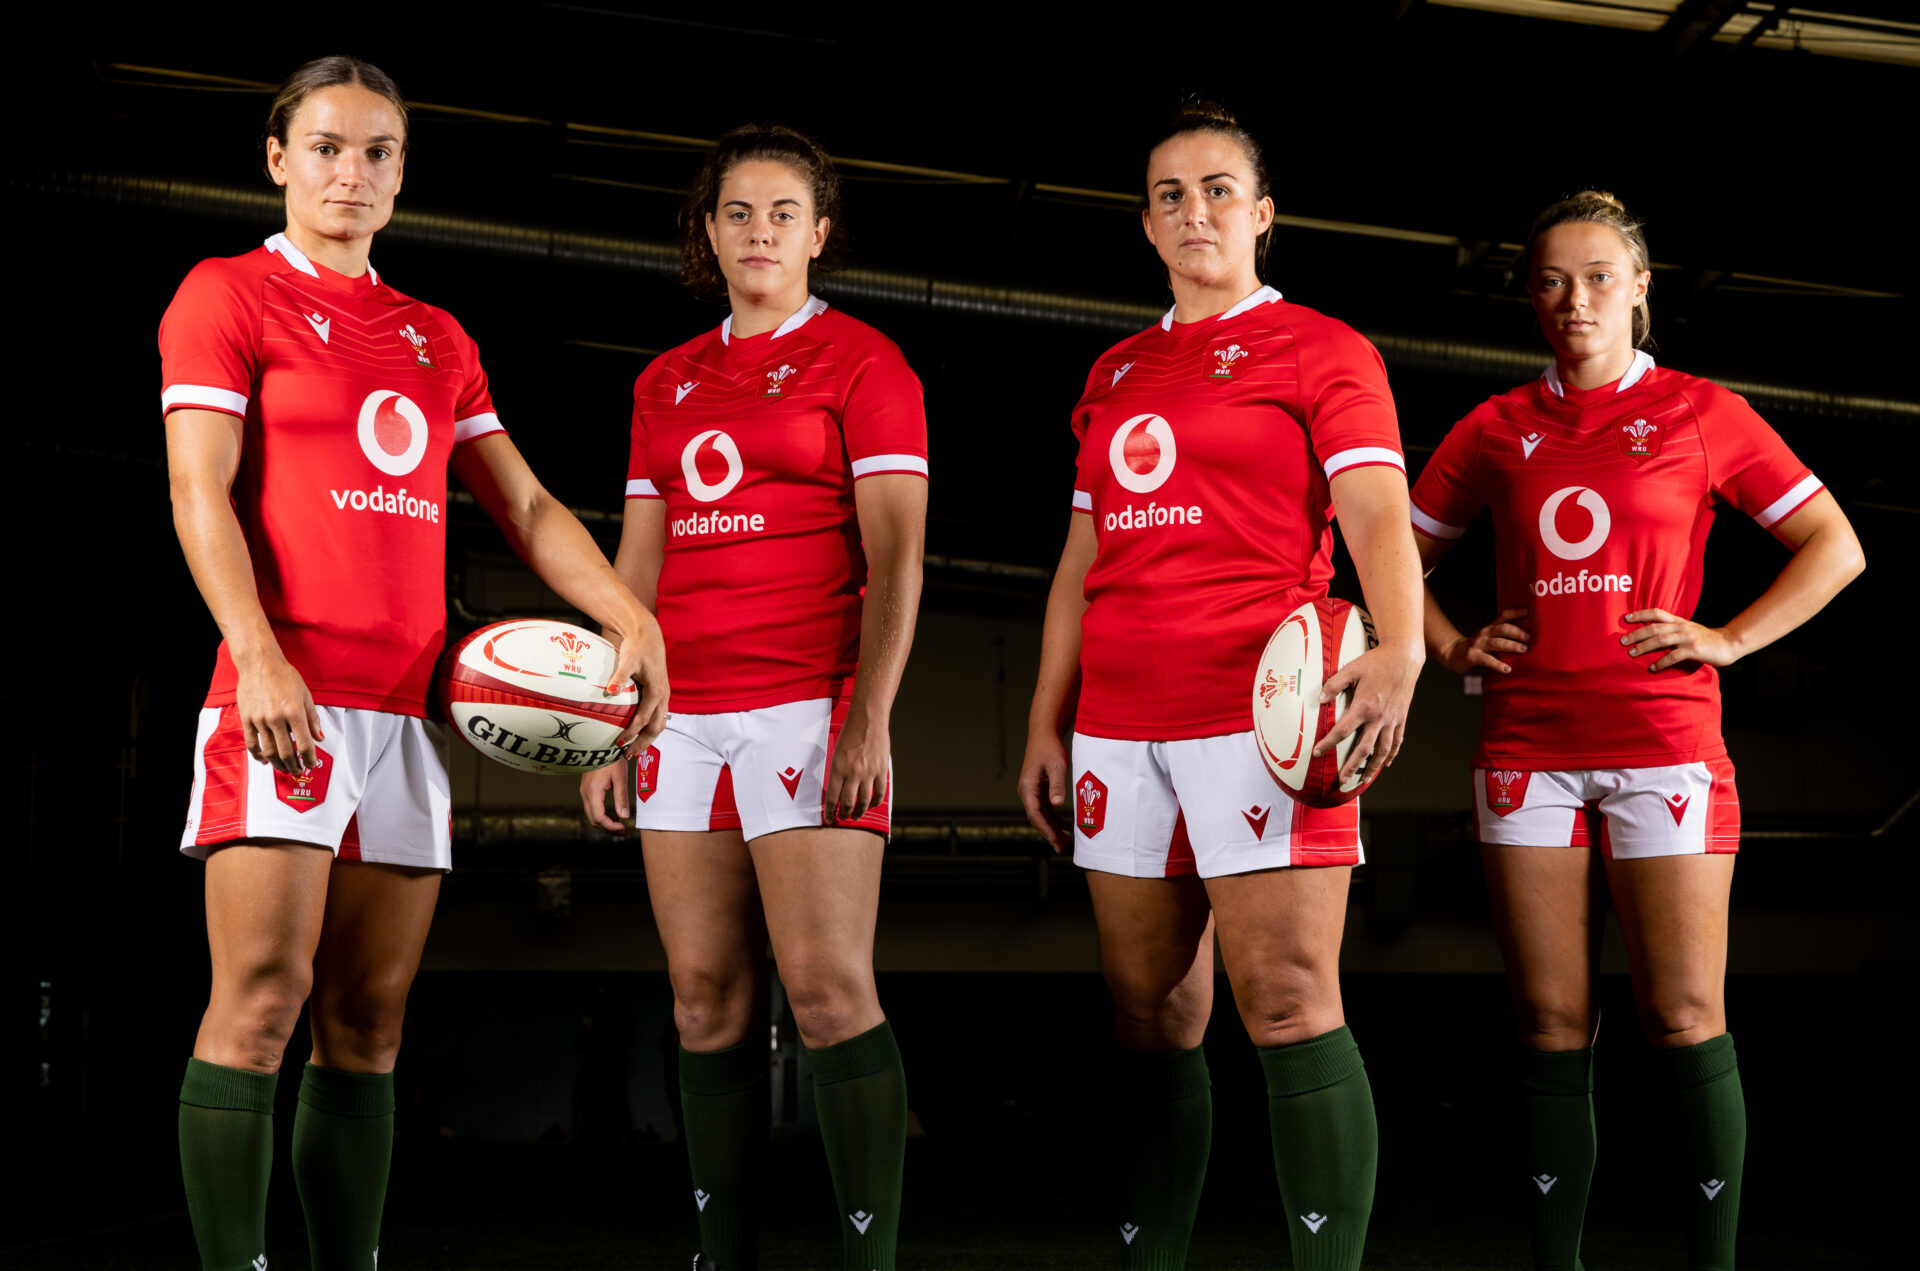 Vodafone in landmark multiyear partnership with Welsh Rugby Union